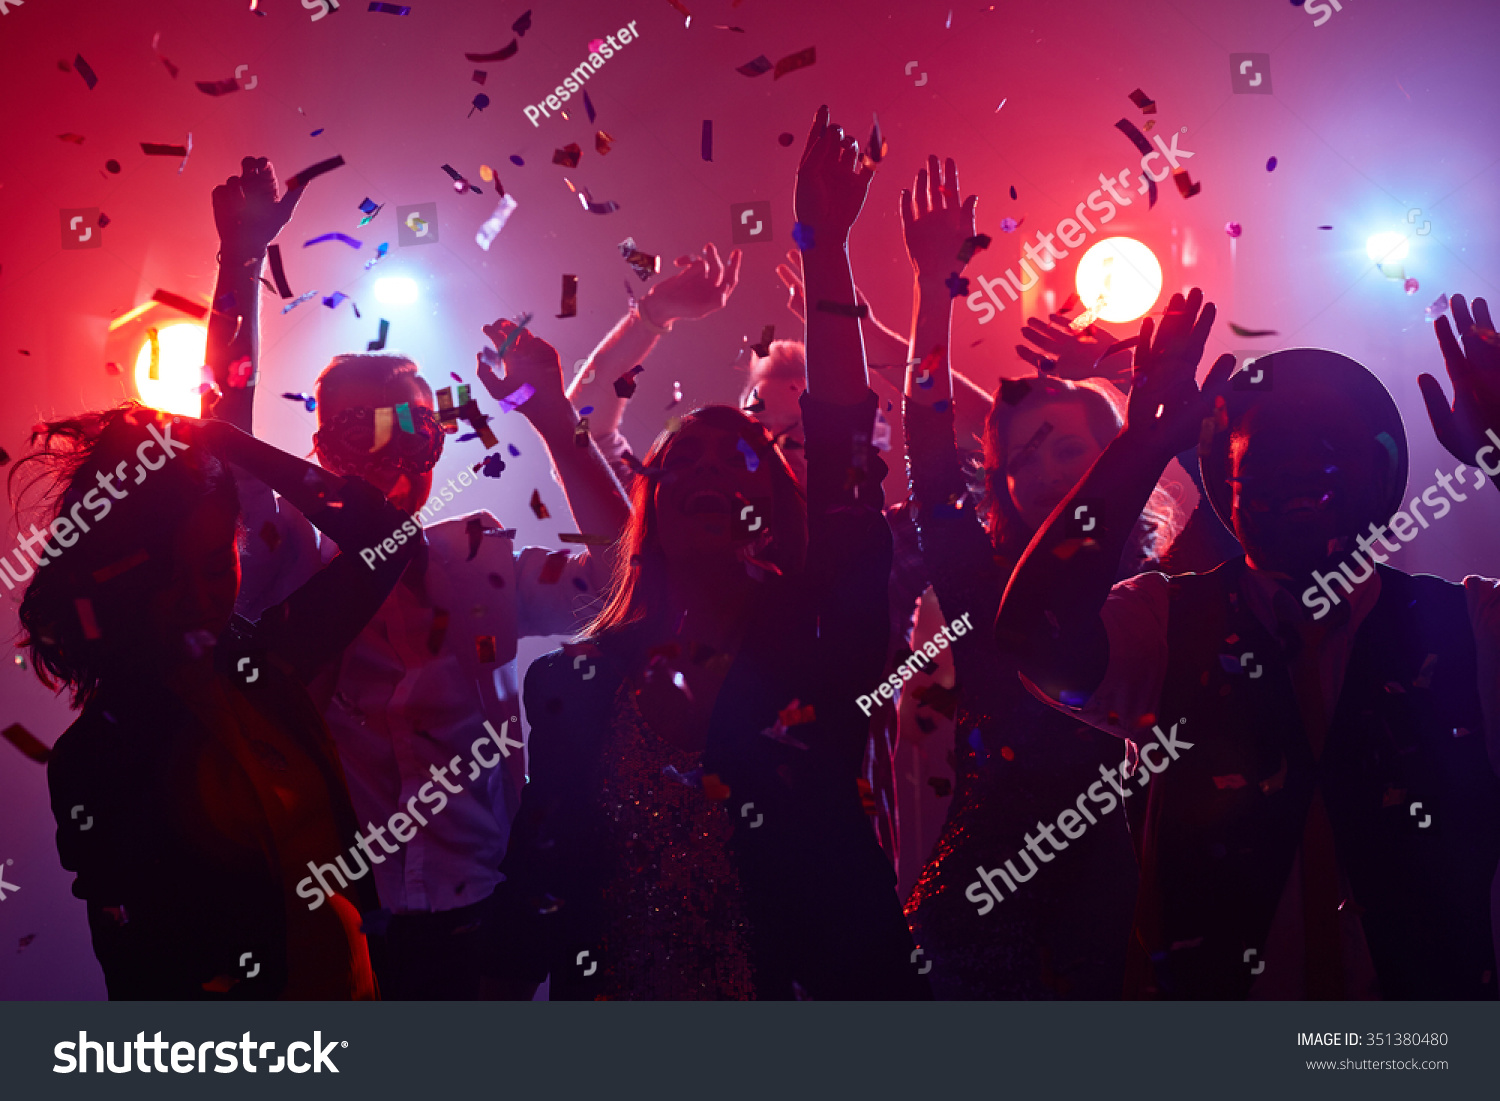 Young people dancing in night club #351380480